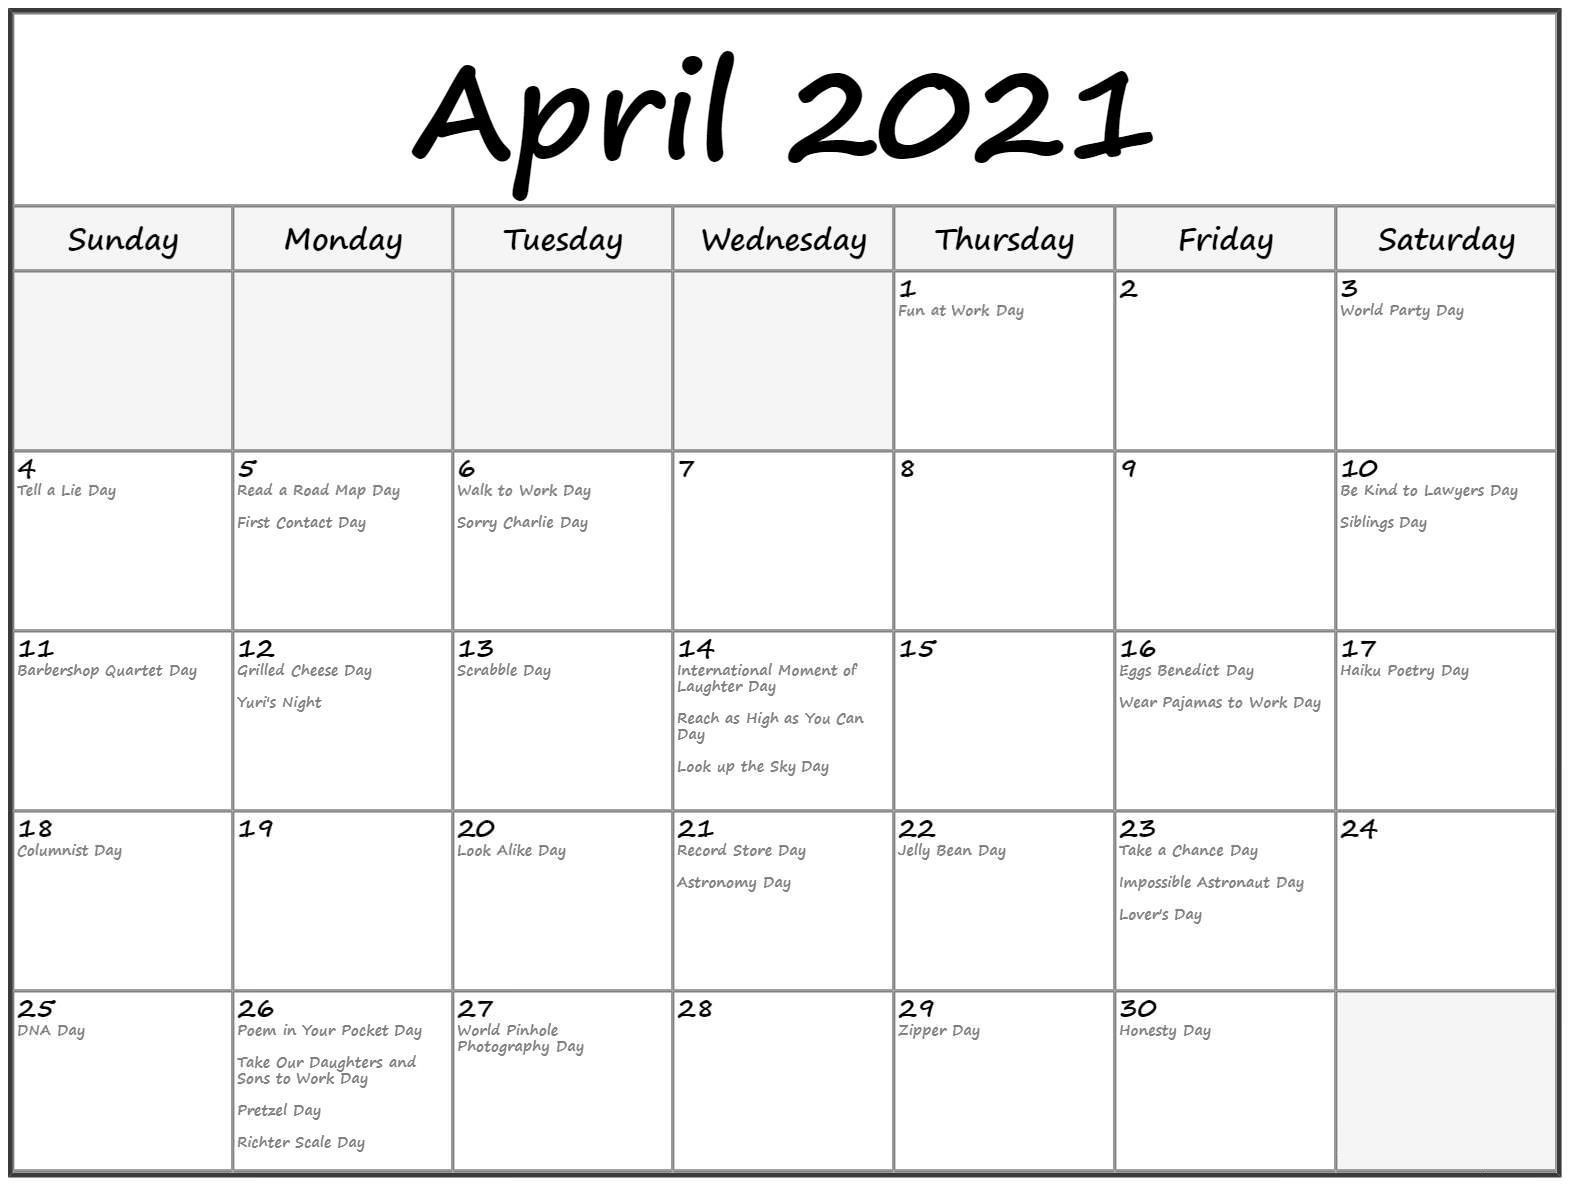 Daily Calendar April 2021 April 2021 Daily Calendar Free Printable Calendar Templates